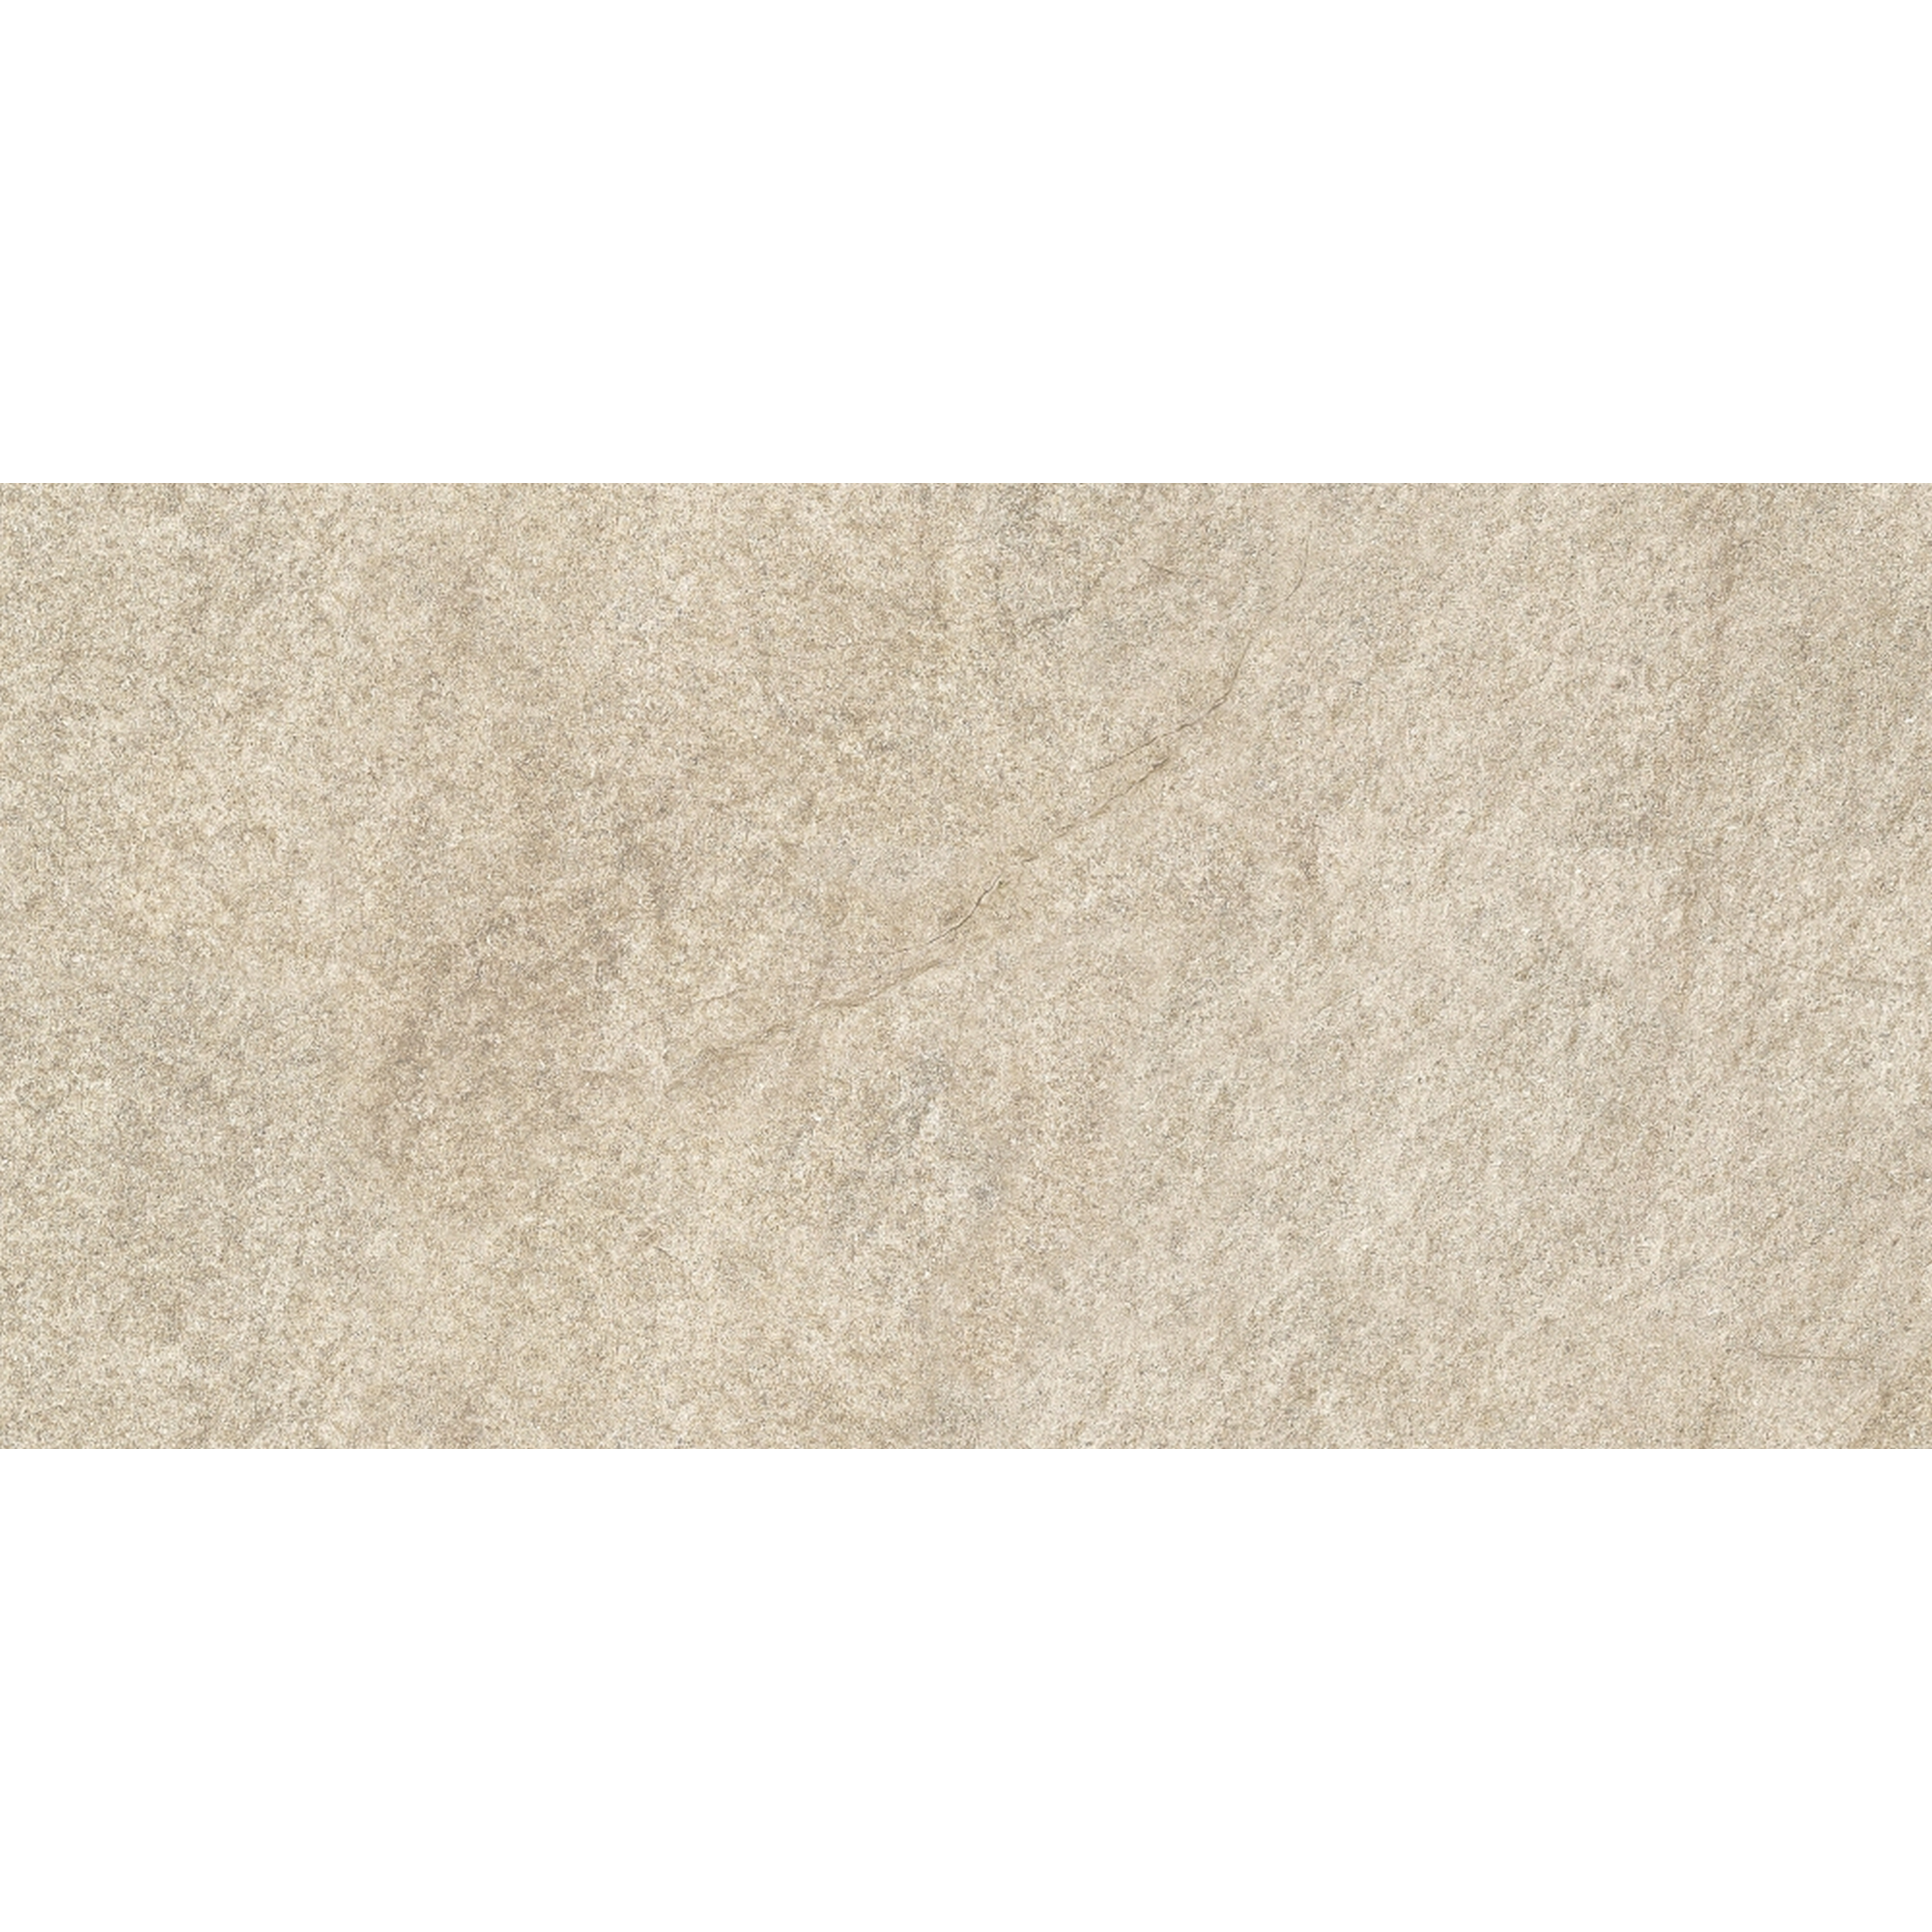 Bodenplatte 'Integra Keramik Quarzit' beige 60 x 120 x 2 cm + product picture